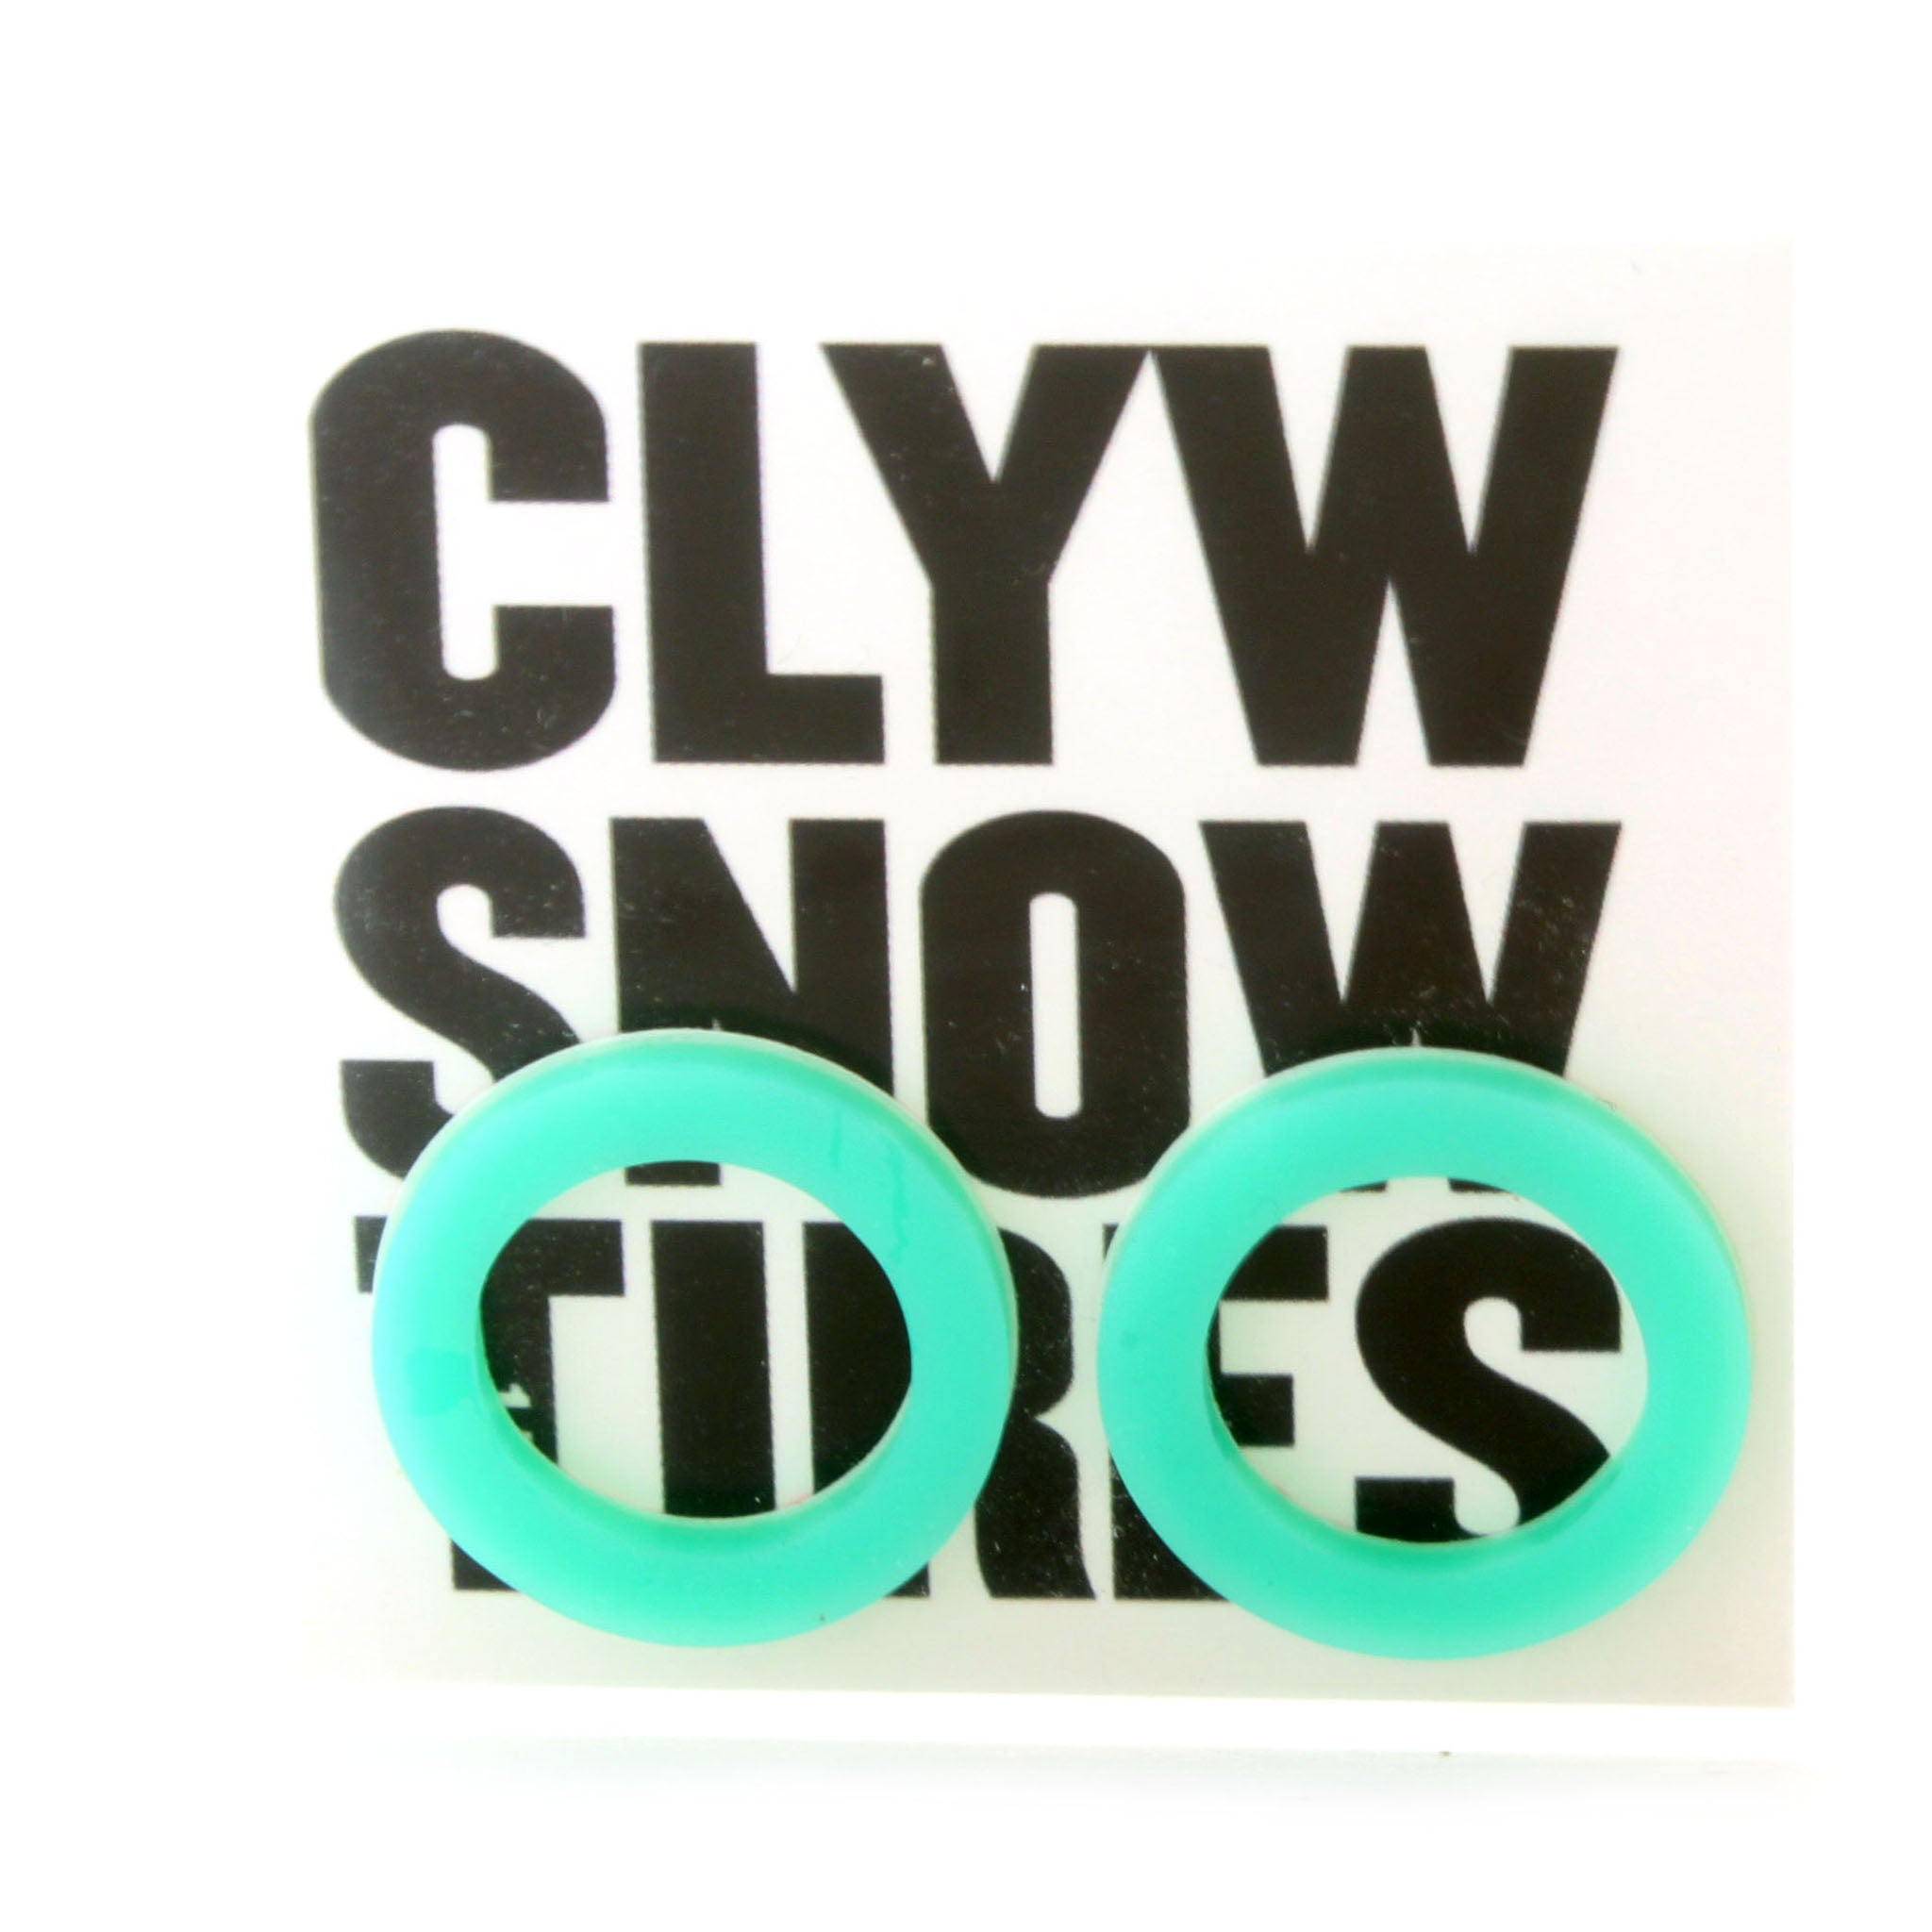 CLYW Snow Tires Pad (2pcs)